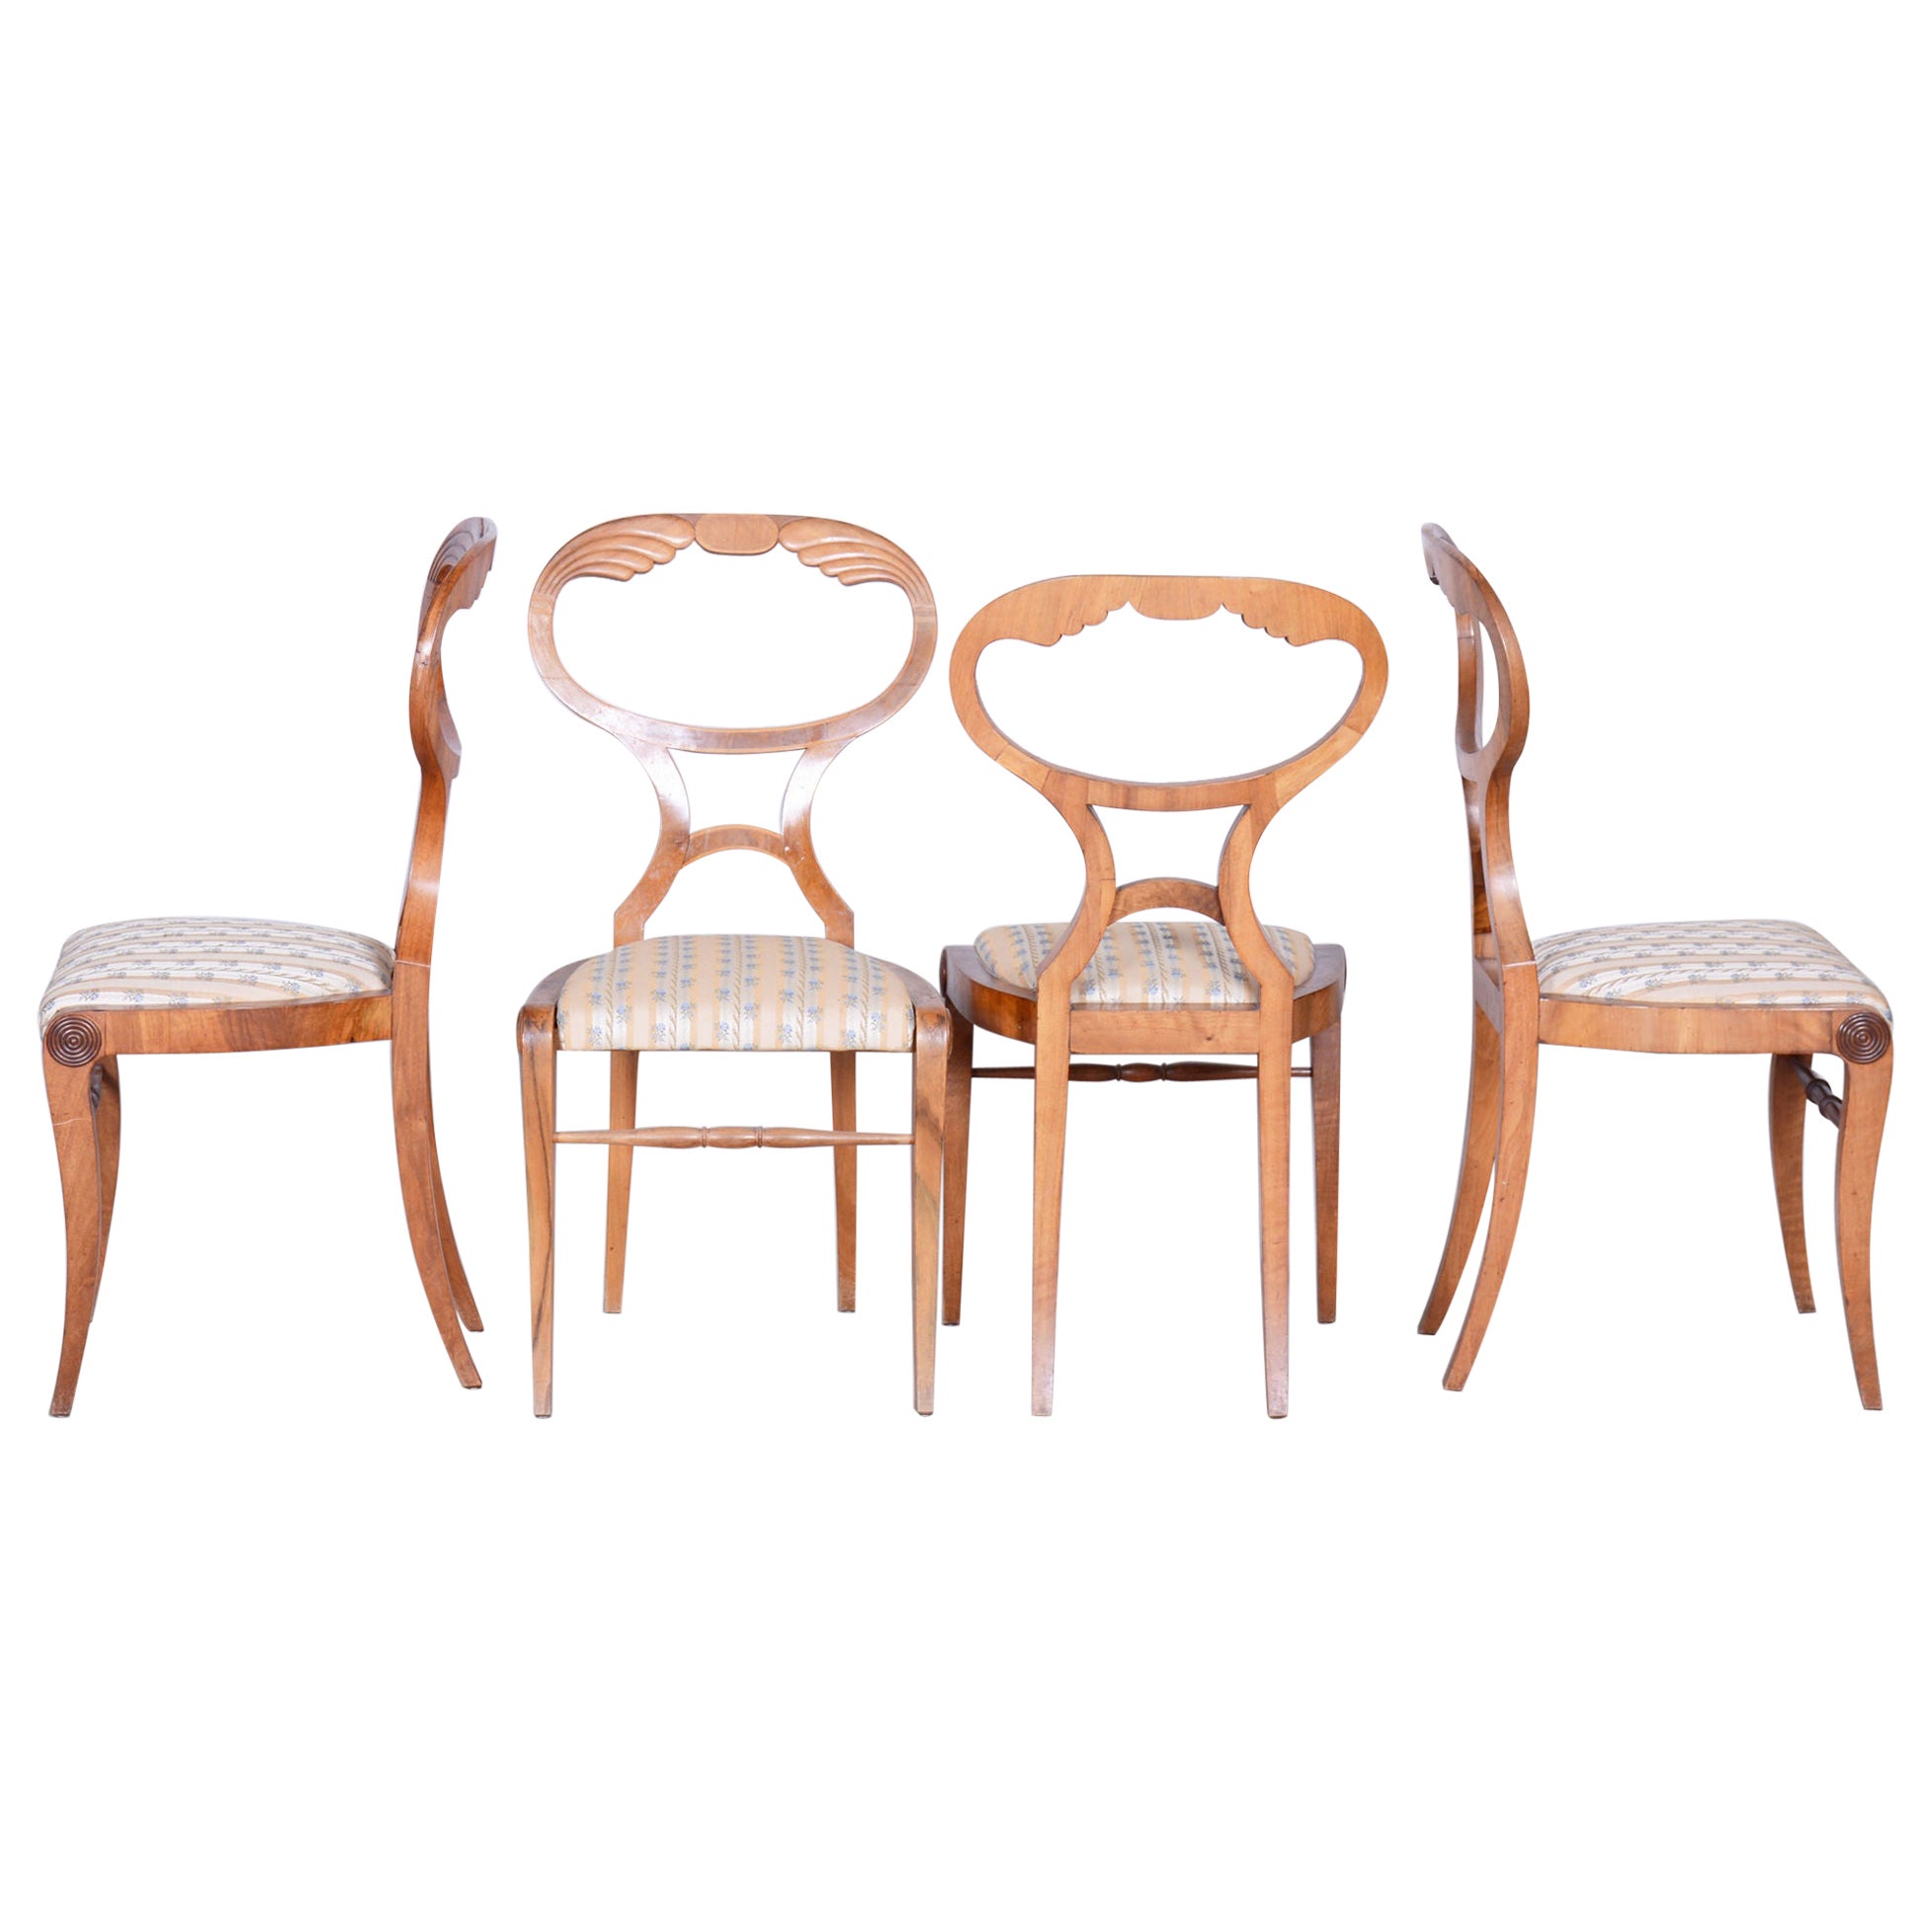 Restored Biedermeier Set of Four Chairs, Oak, Walnut, Vienna, Austria, 1820s